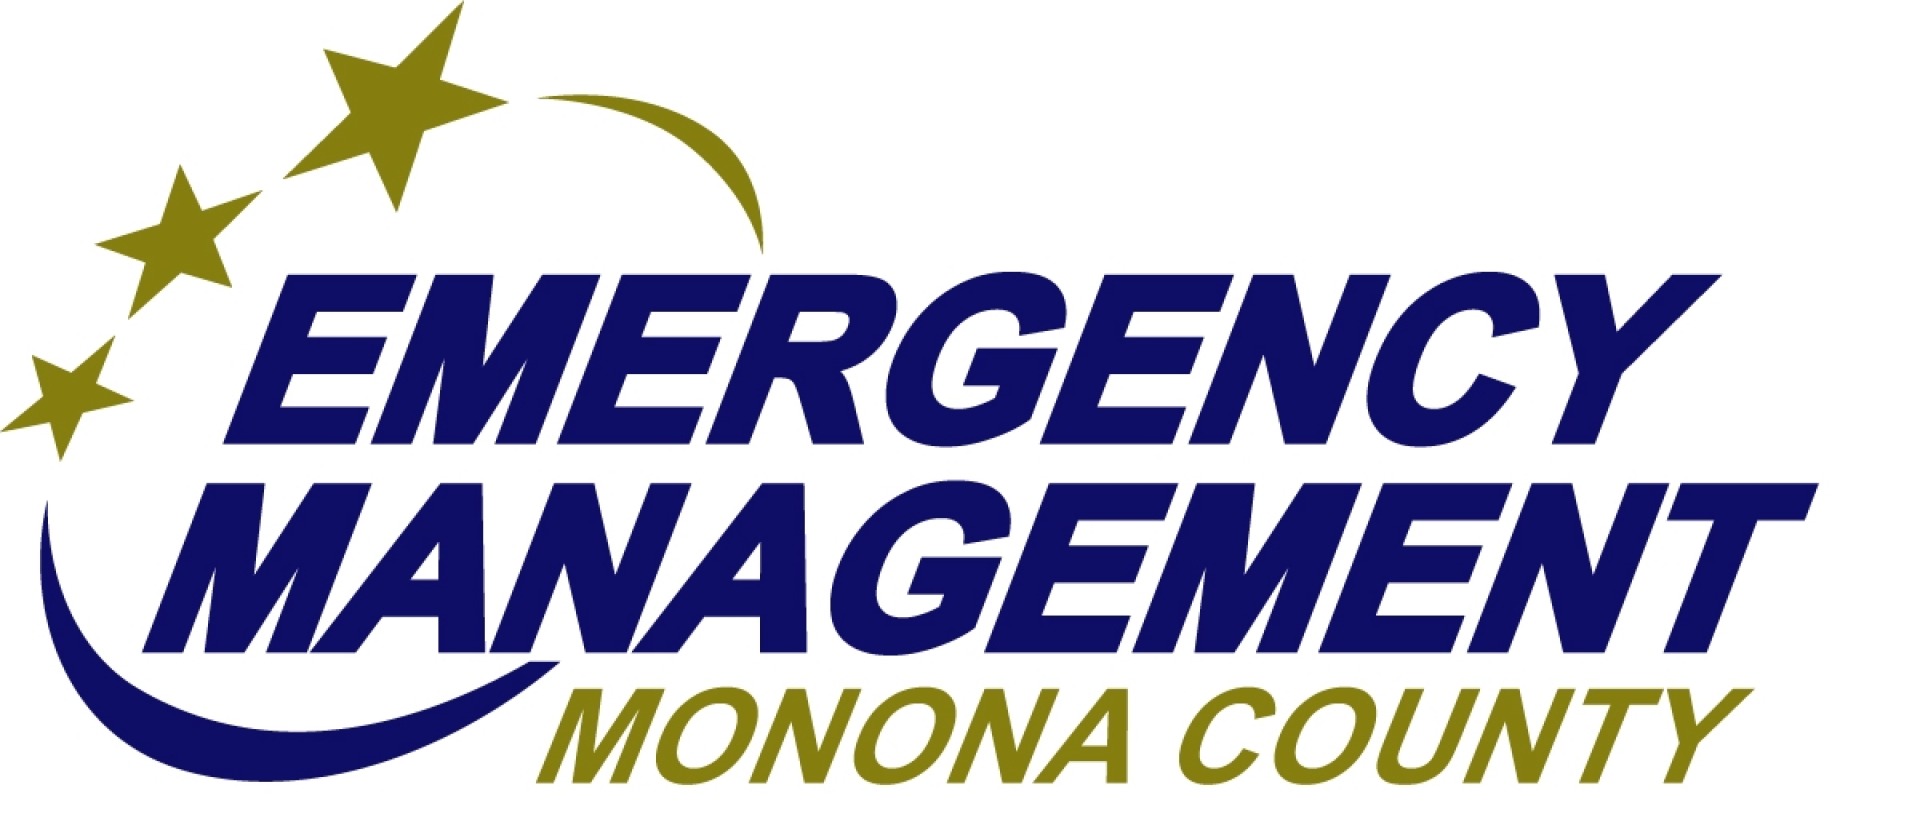 Monona County Emergency Management logo.